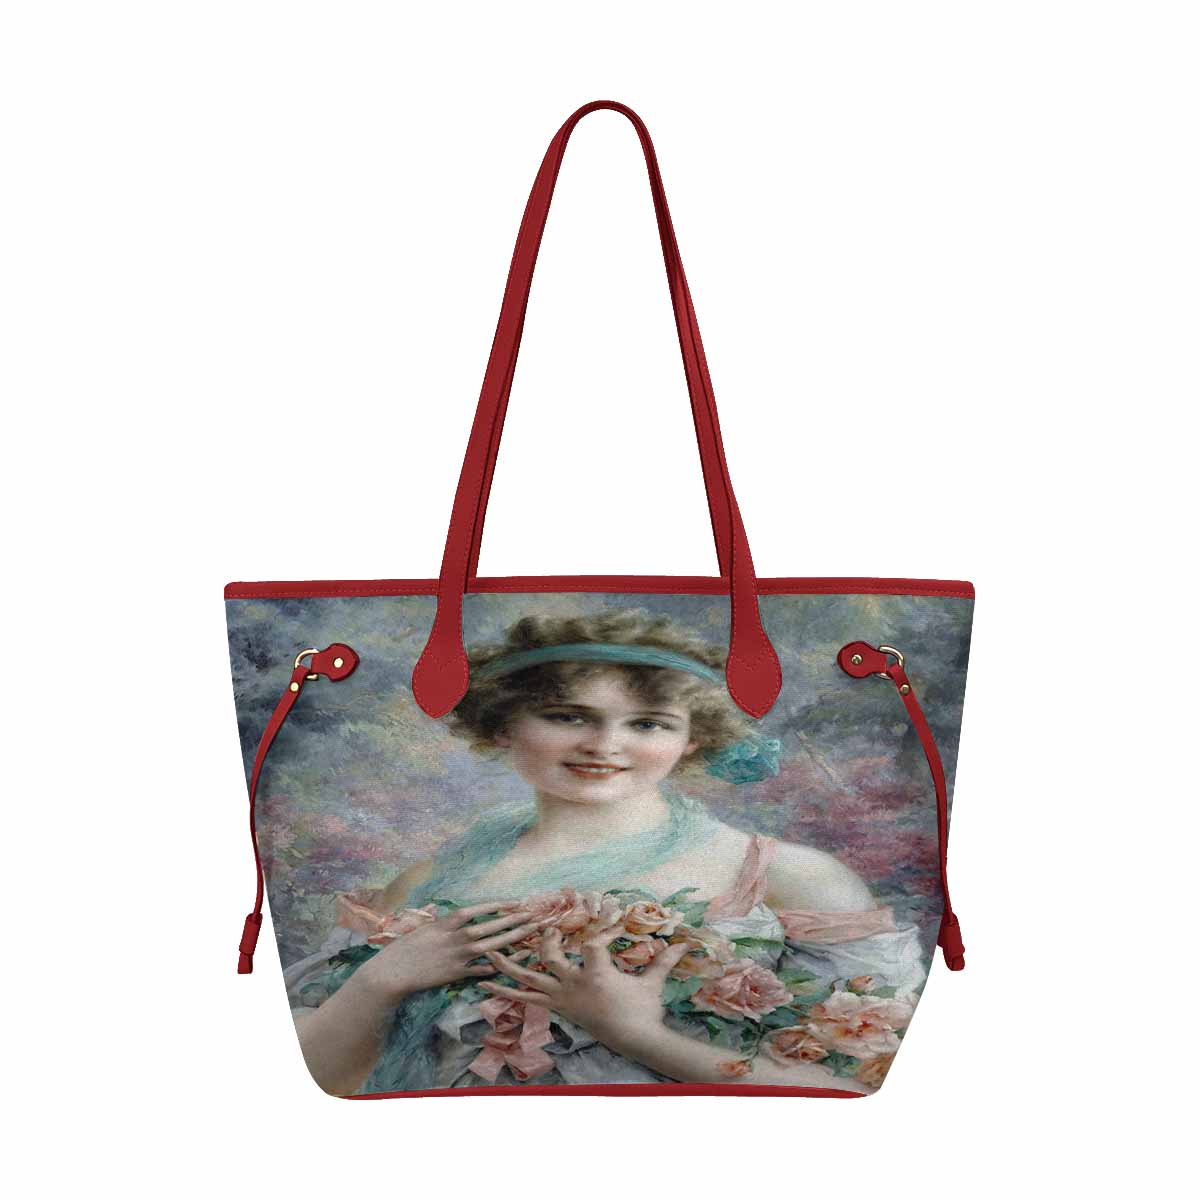 Victorian Lady Design Handbag, Model 1695361, The Rose Girl, RED TRIM